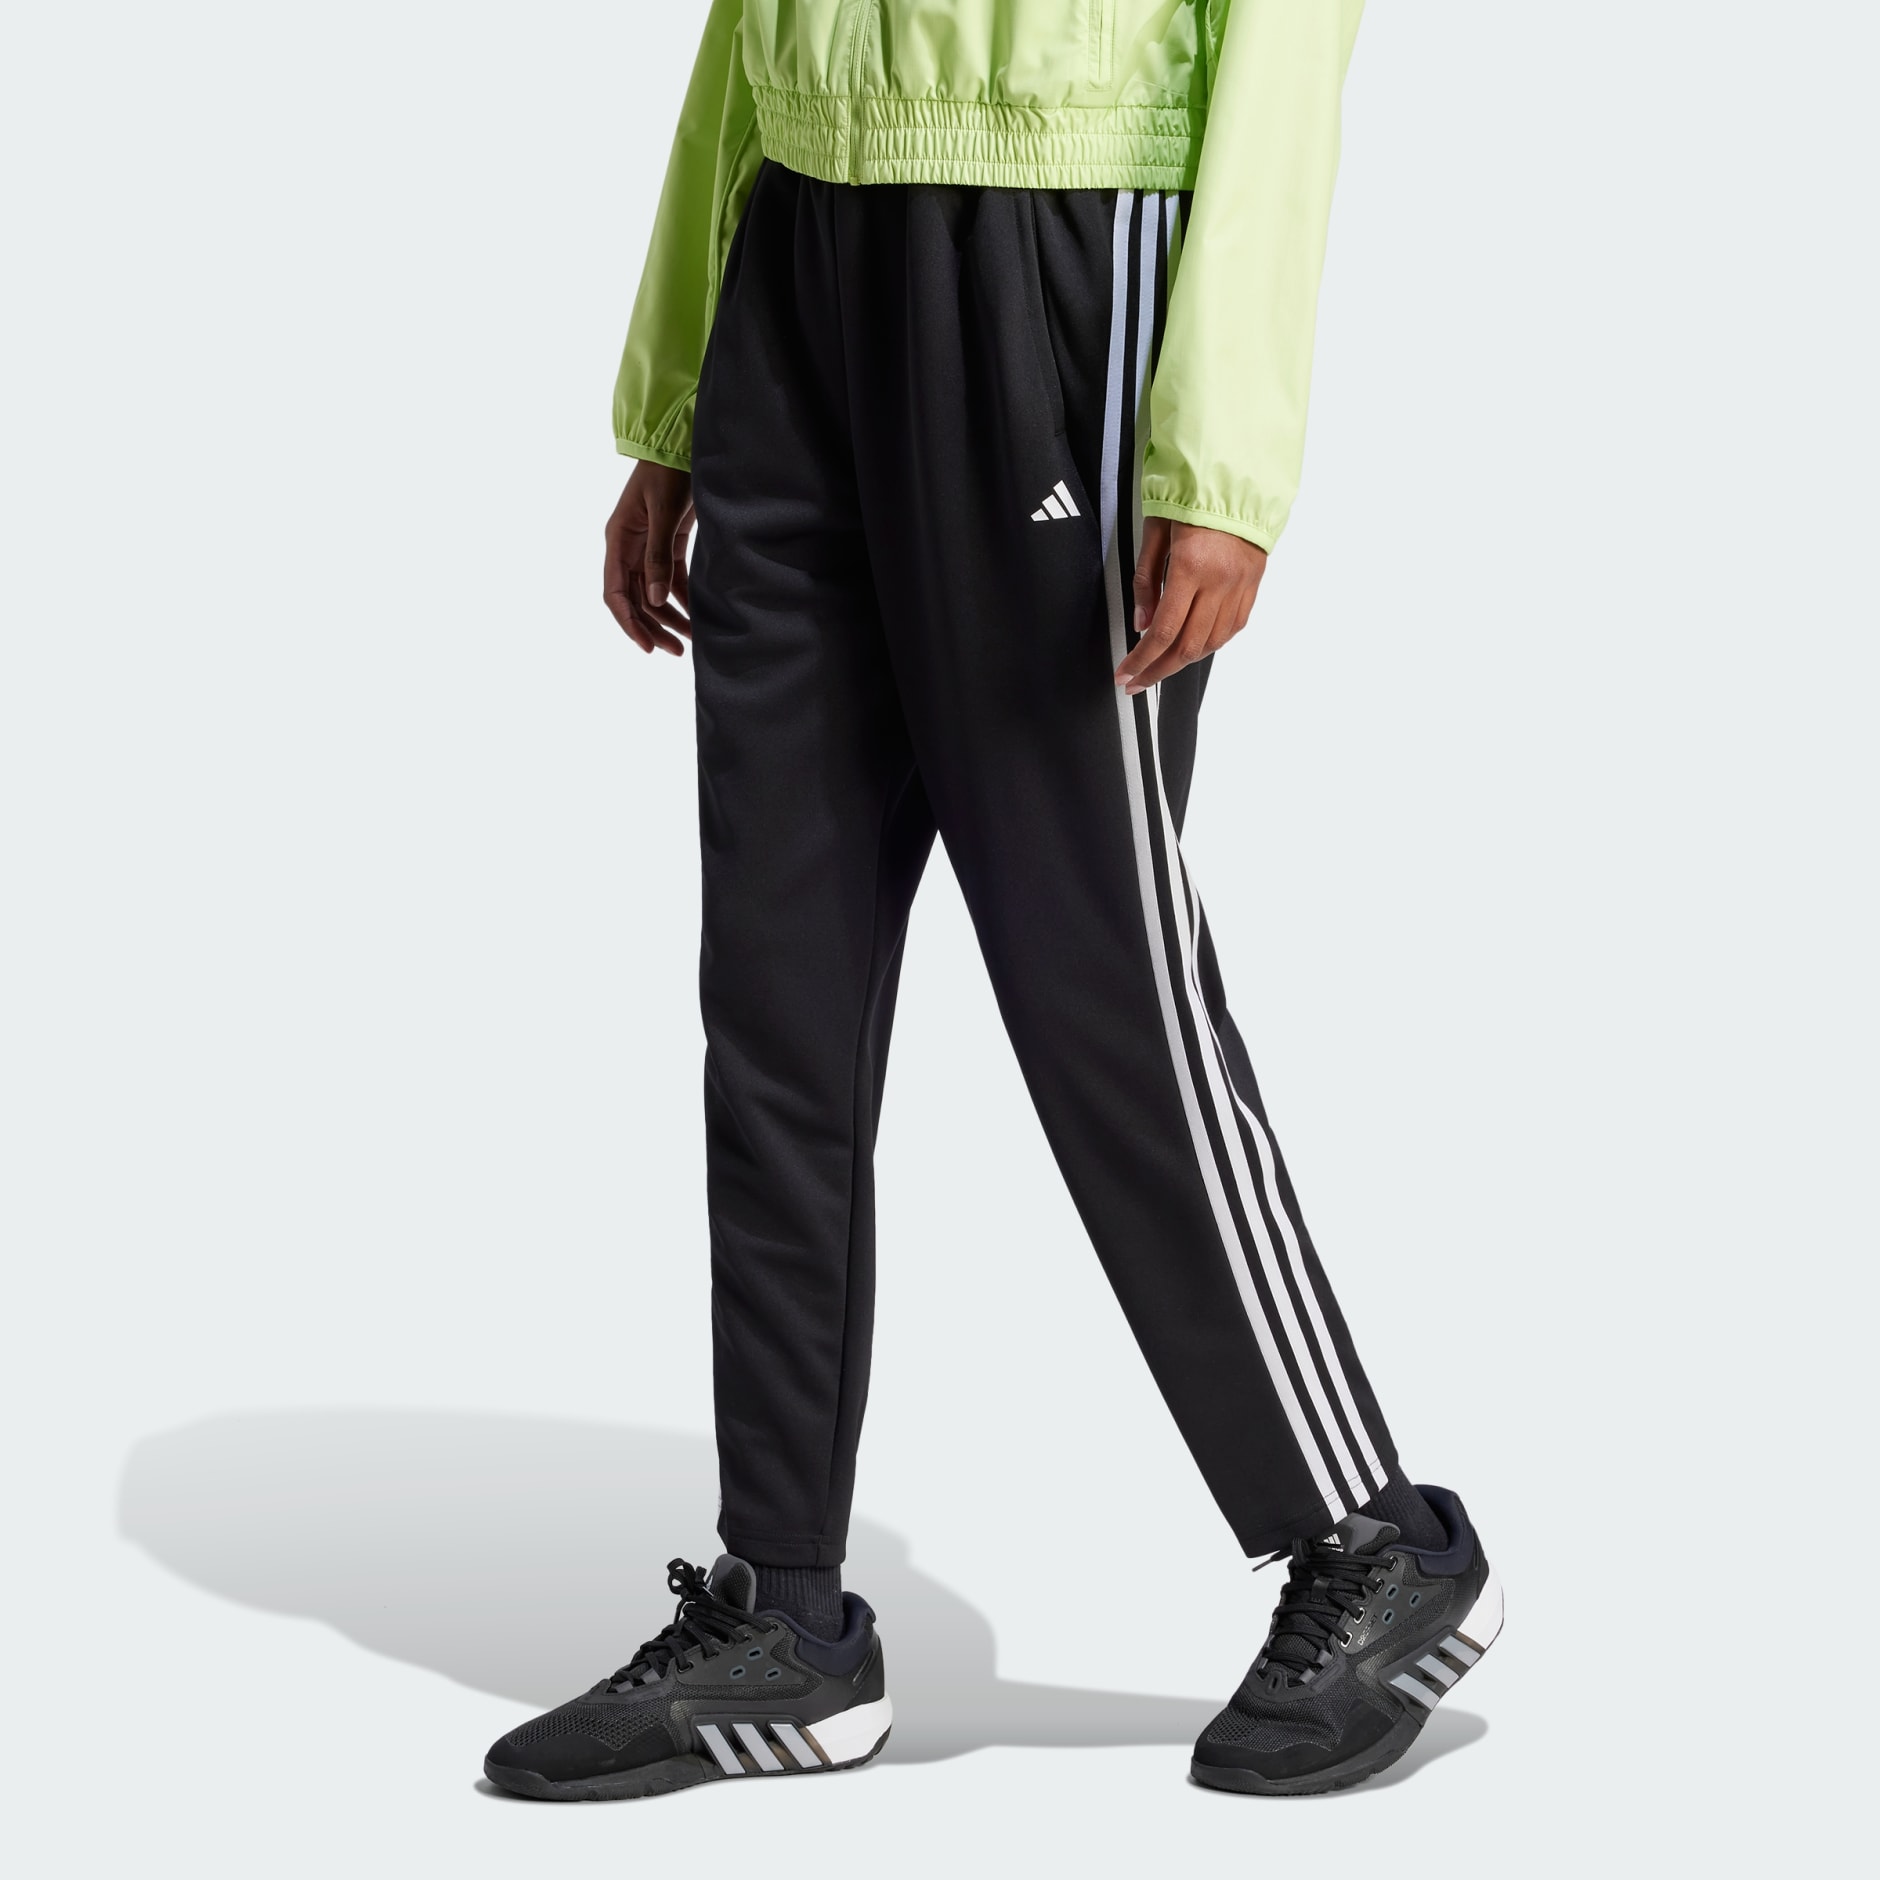 adidas Originals Men's 3-Stripes Pants, Black, S : Amazon.in: Fashion